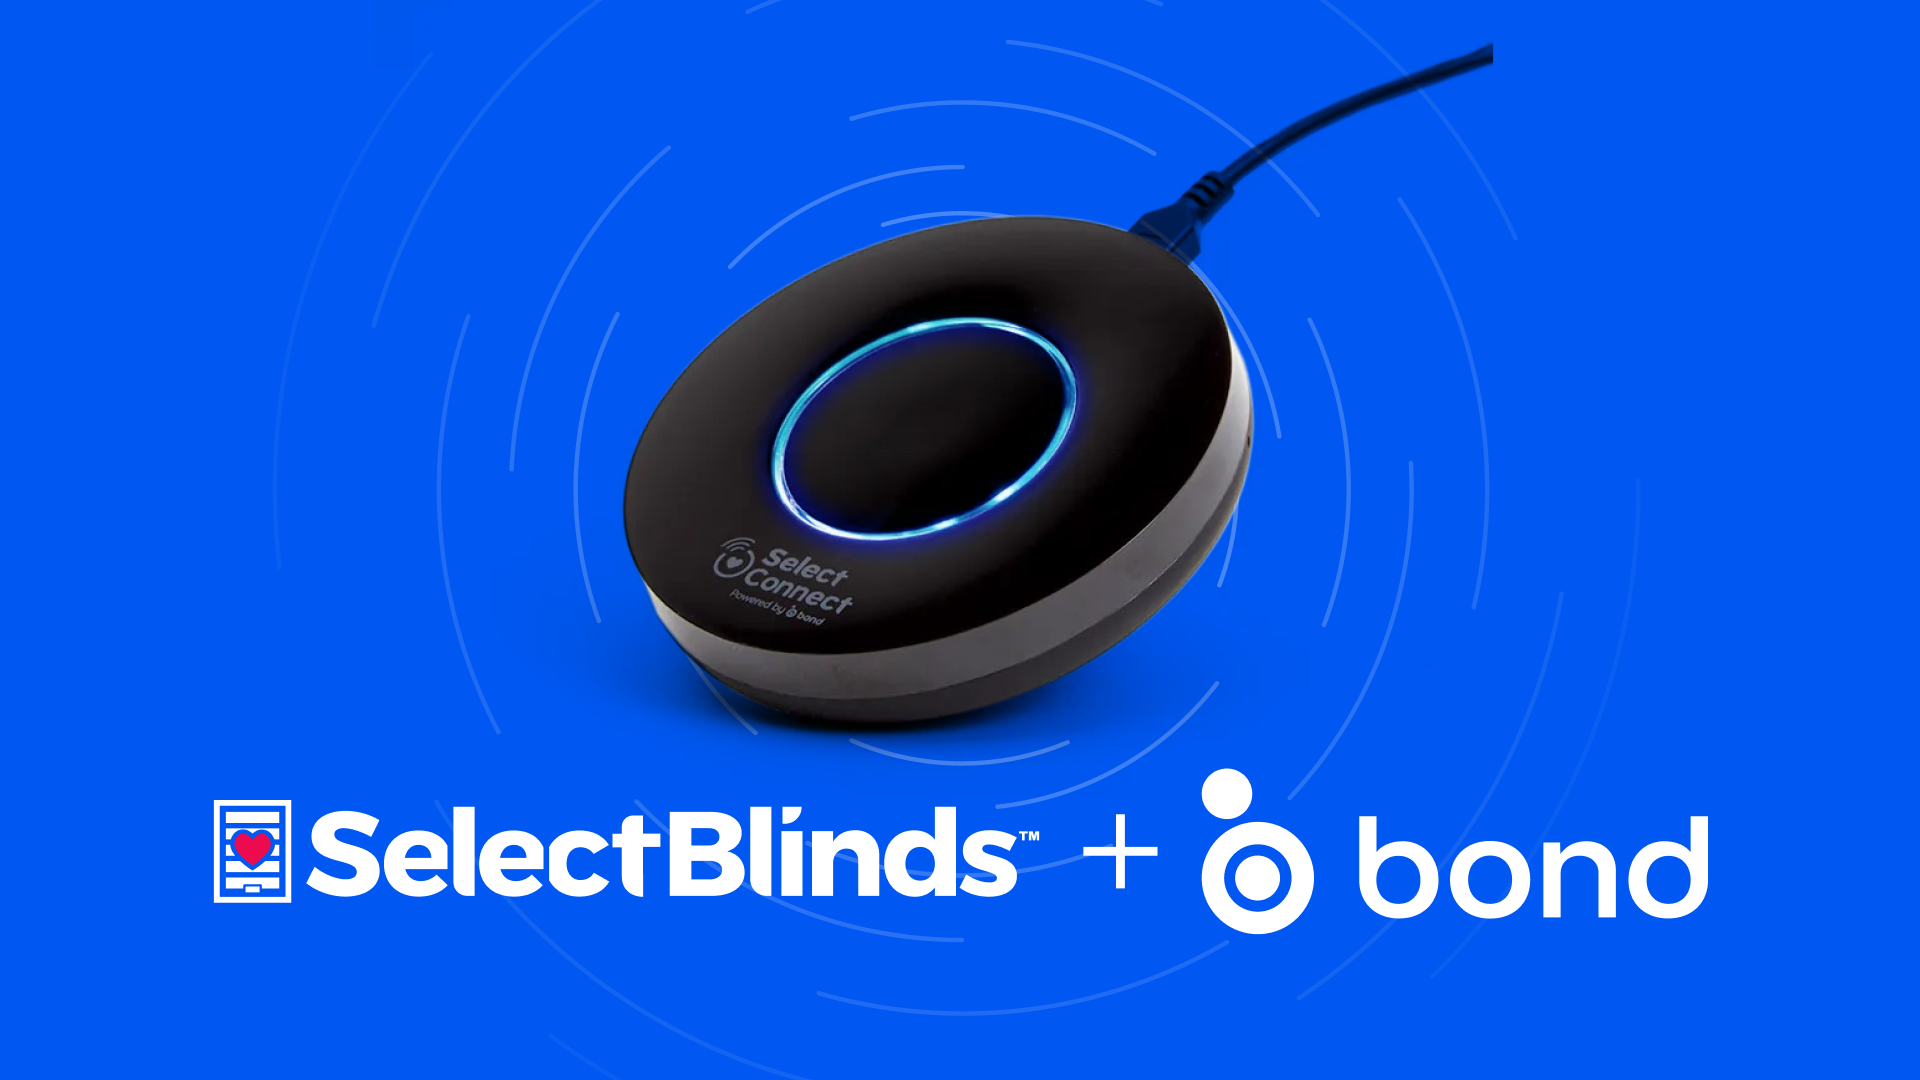 New partnership! Select Blinds